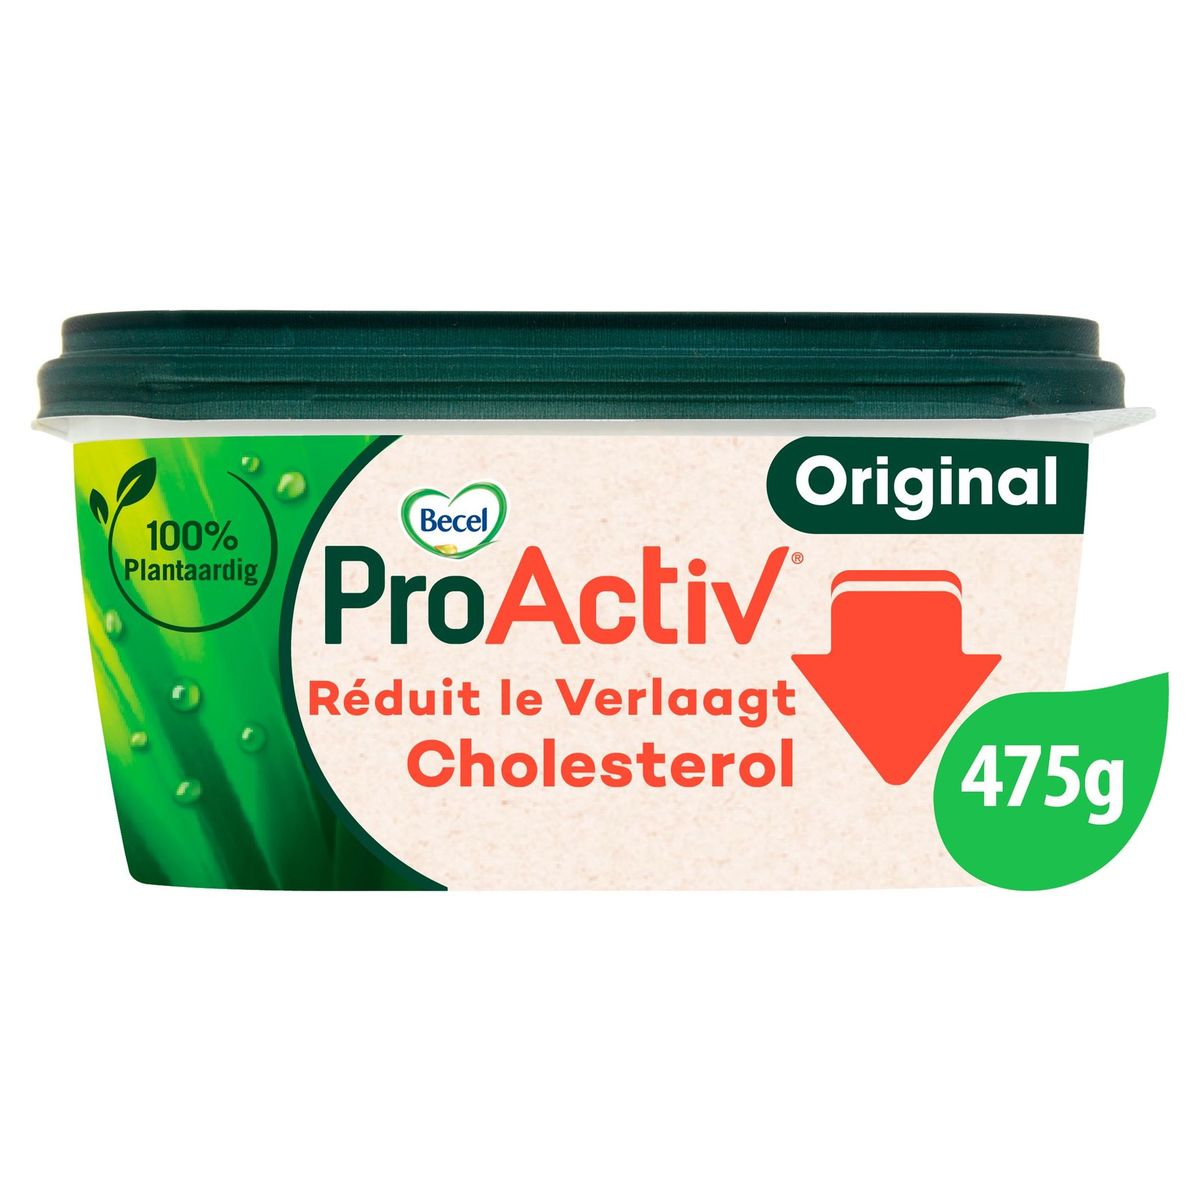 ProActiv | Verlaagt cholesterol | 475g